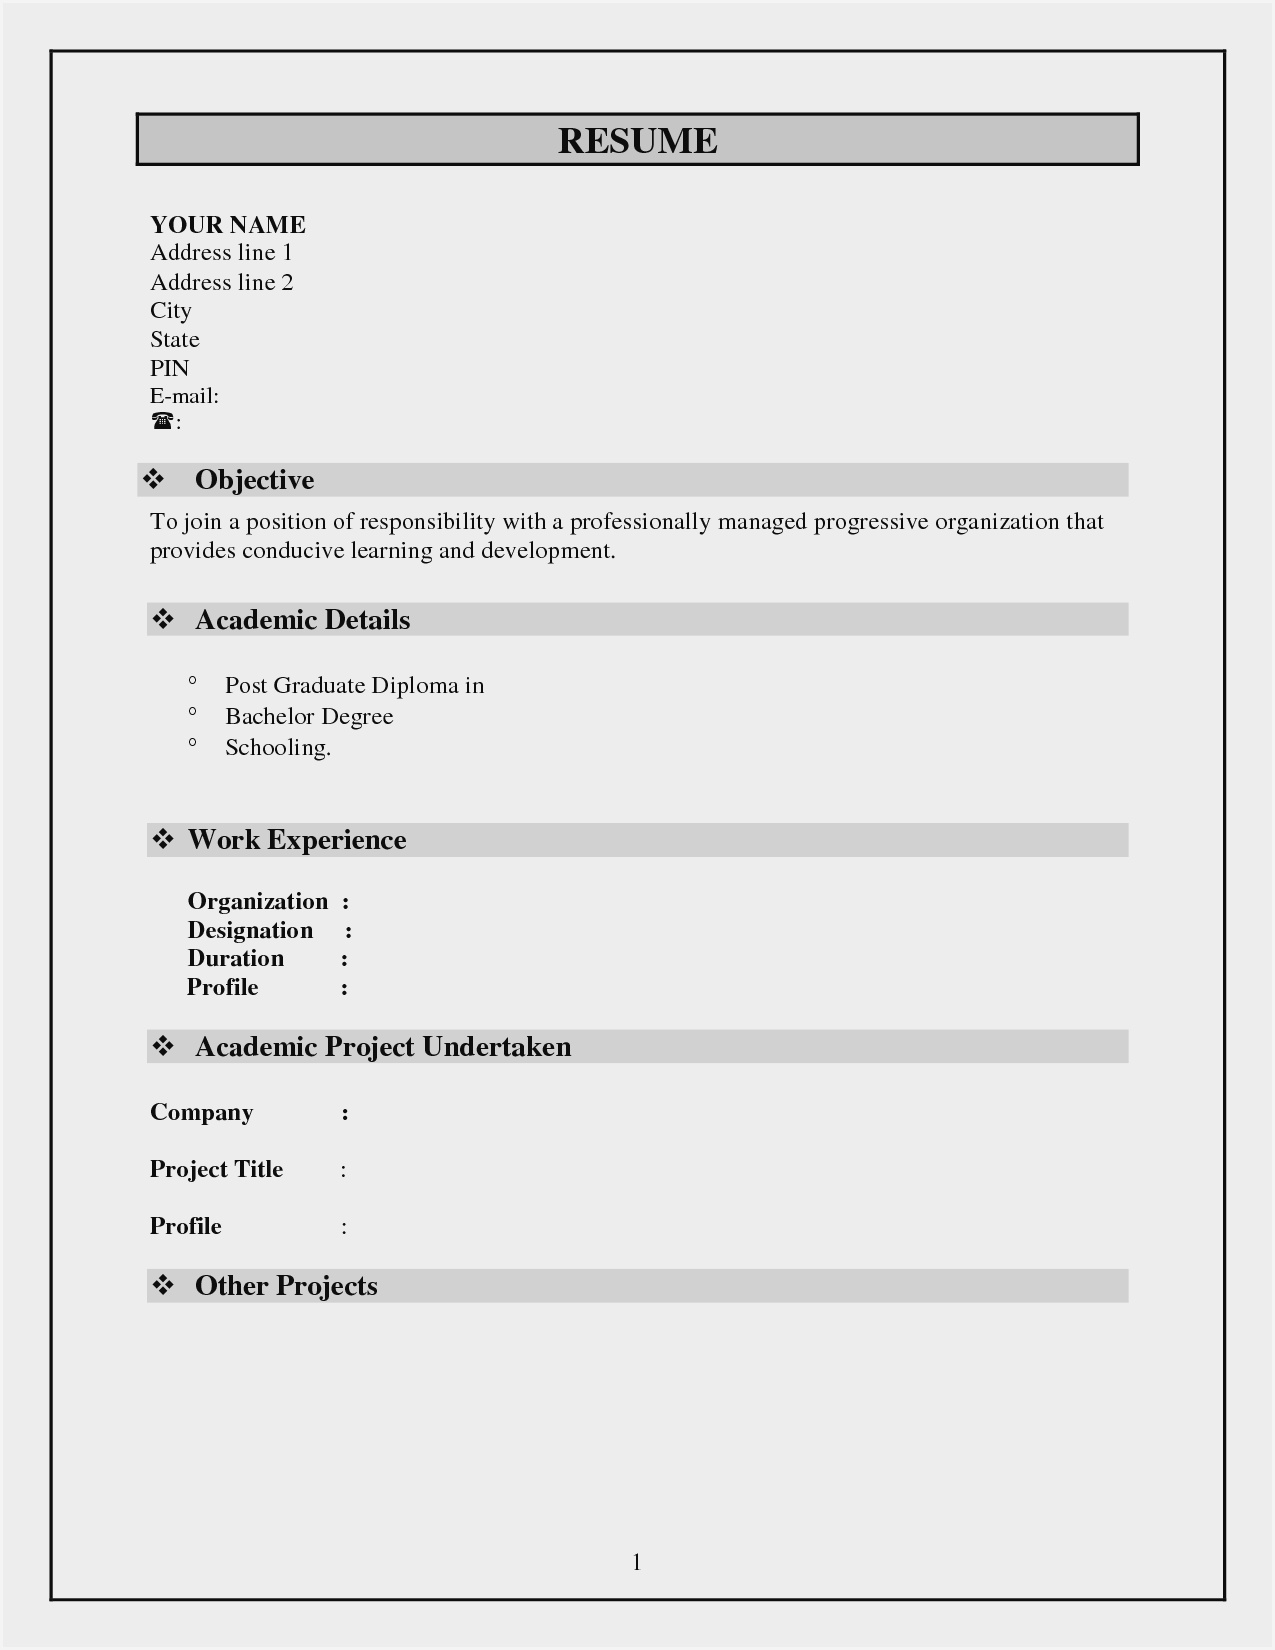 Resume Blank Format Free Download – Resume : Resume Sample #2712 Regarding Free Blank Cv Template Download